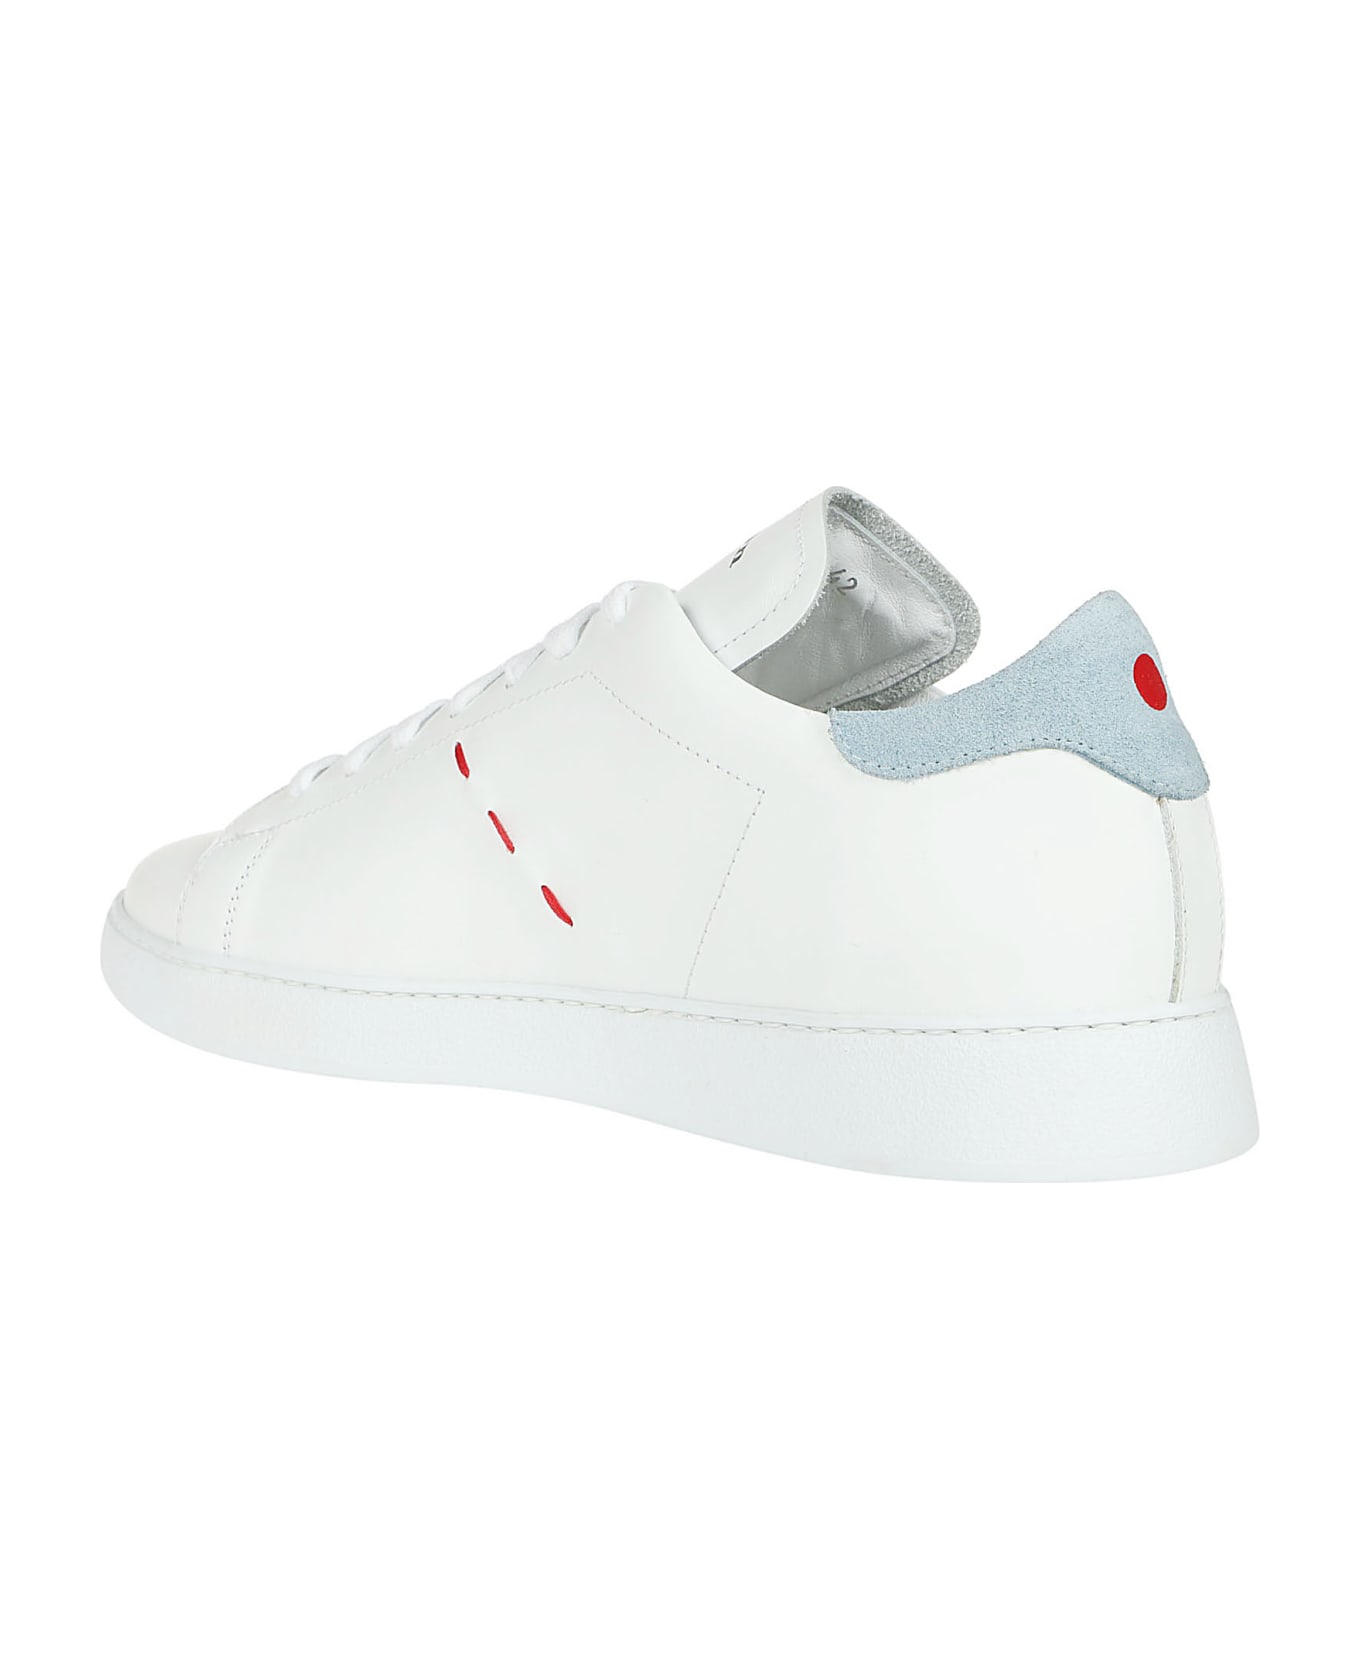 Kiton A068 Sneakers - Bianco/ghiaccio